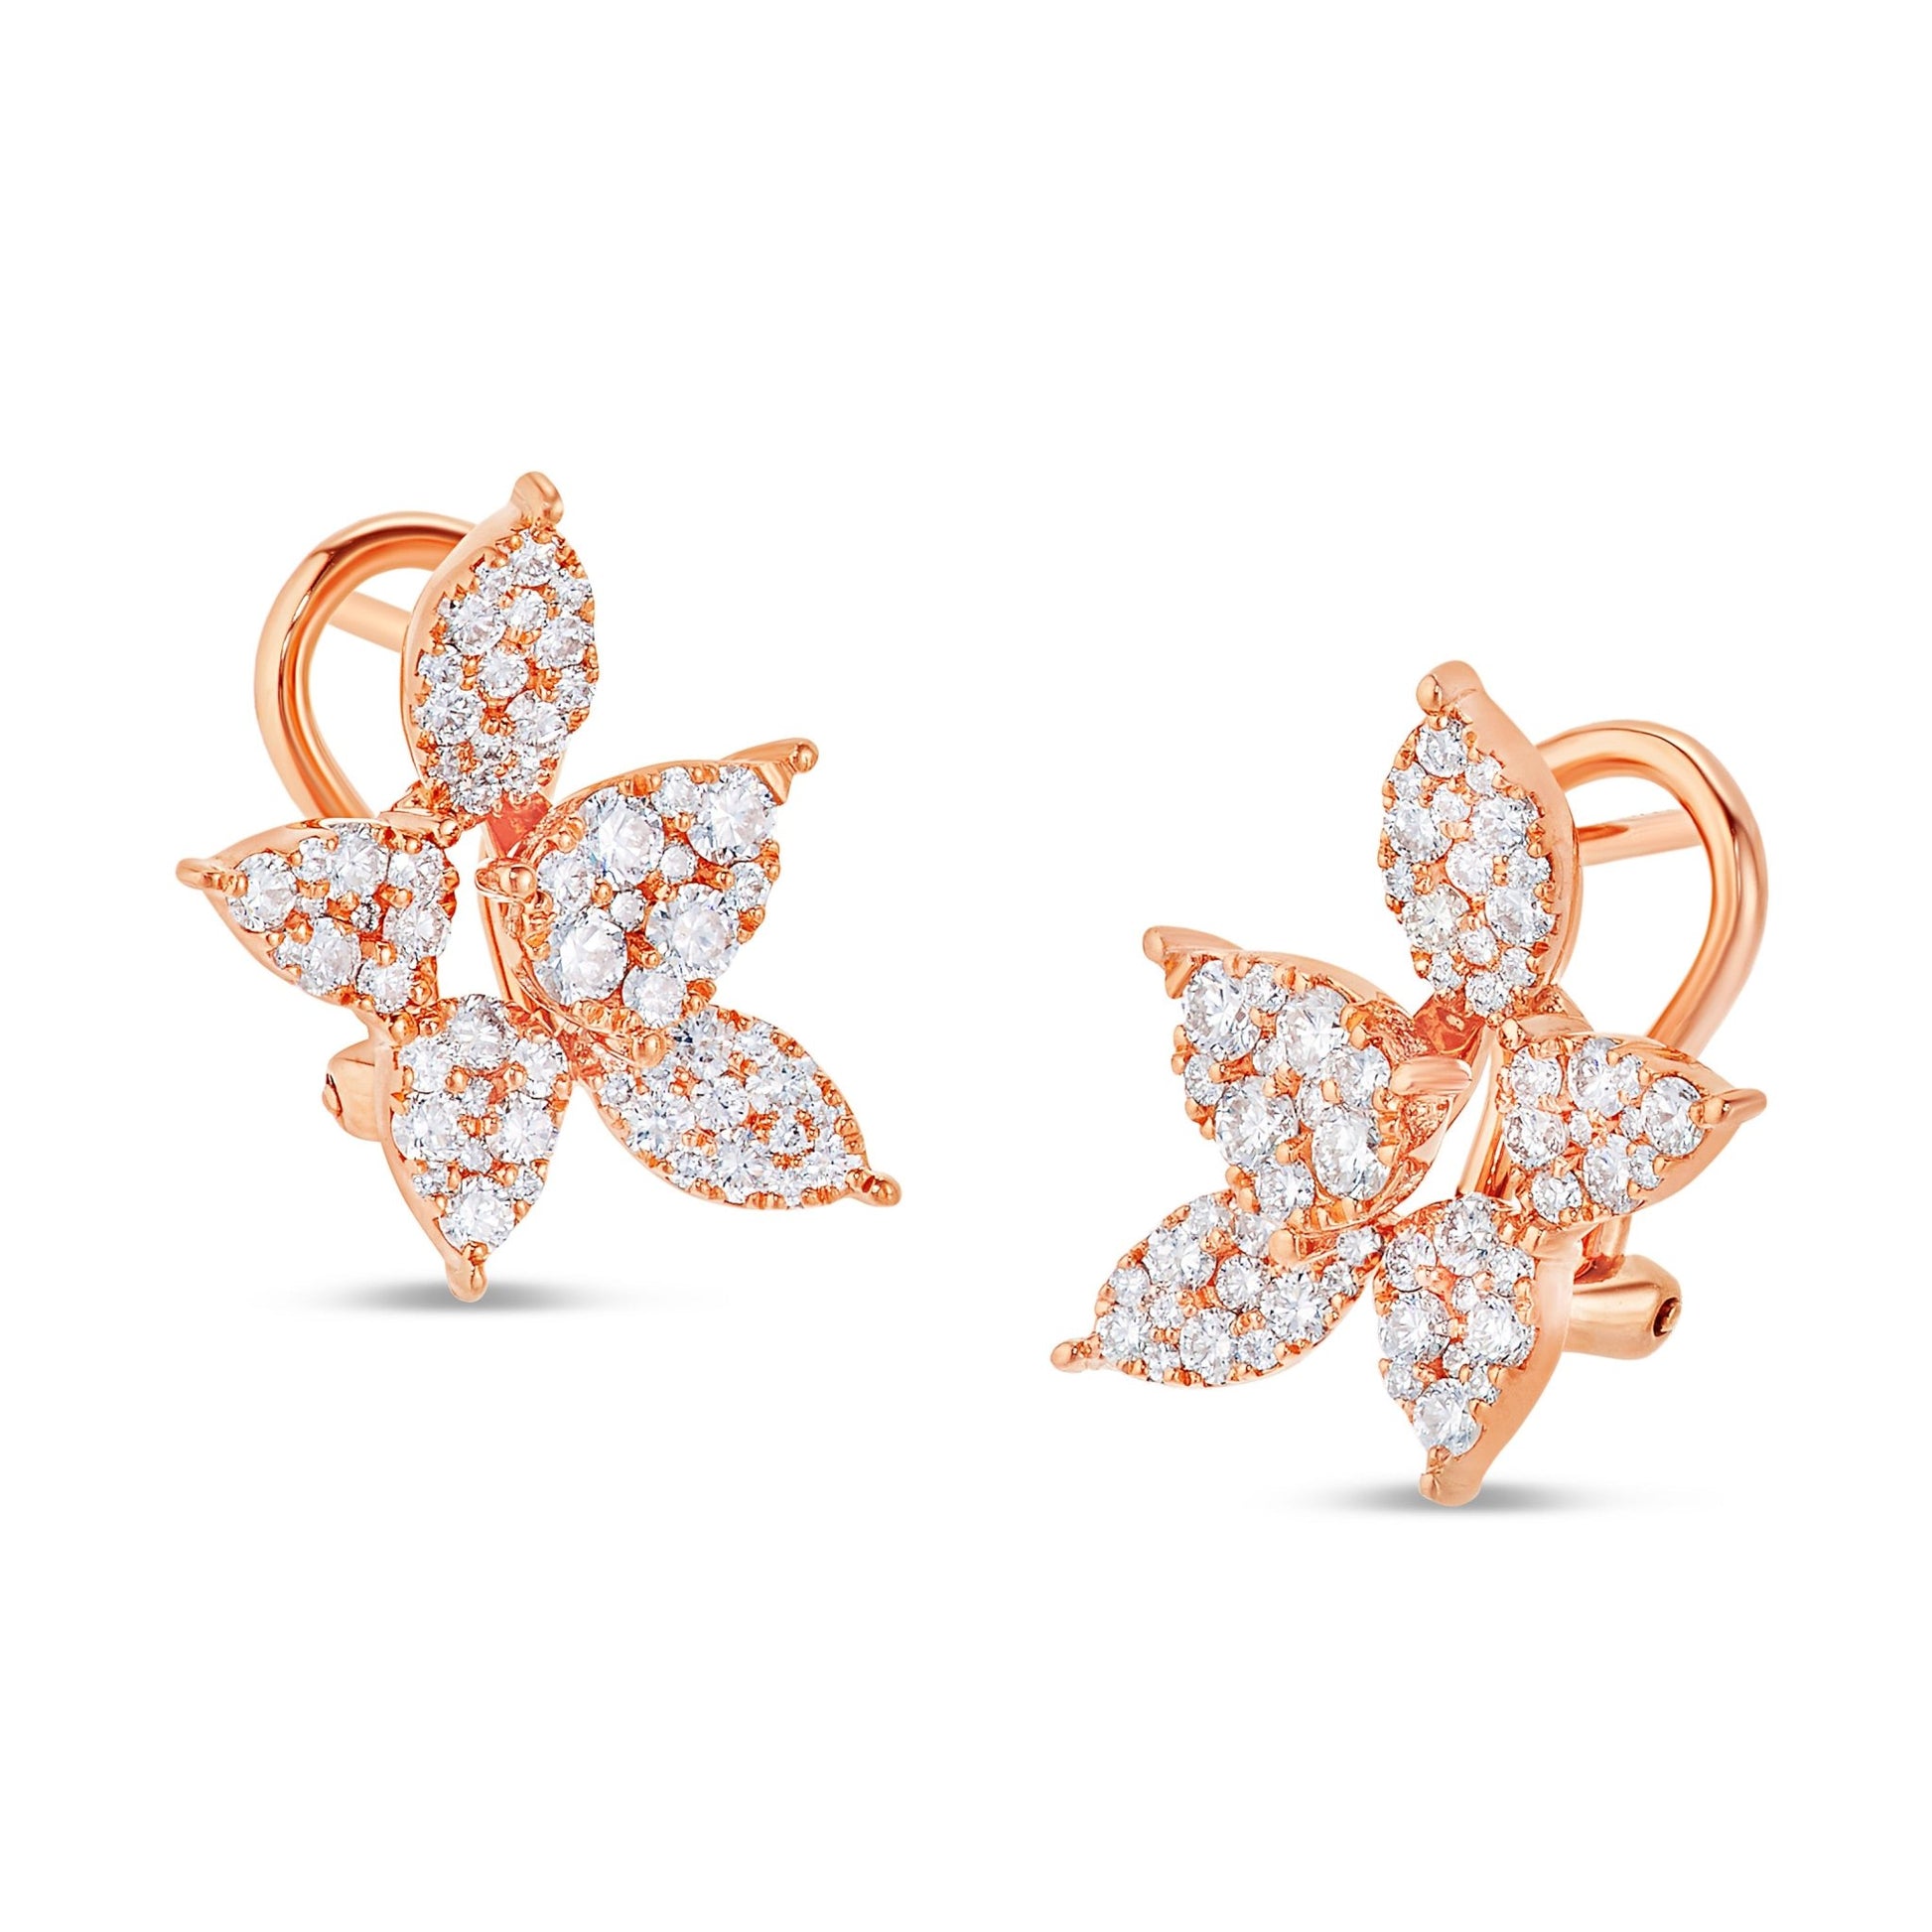 Floral Diamond Stud Earrings - Shyne Jewelers 150-00212 Rose Gold Shyne Jewelers